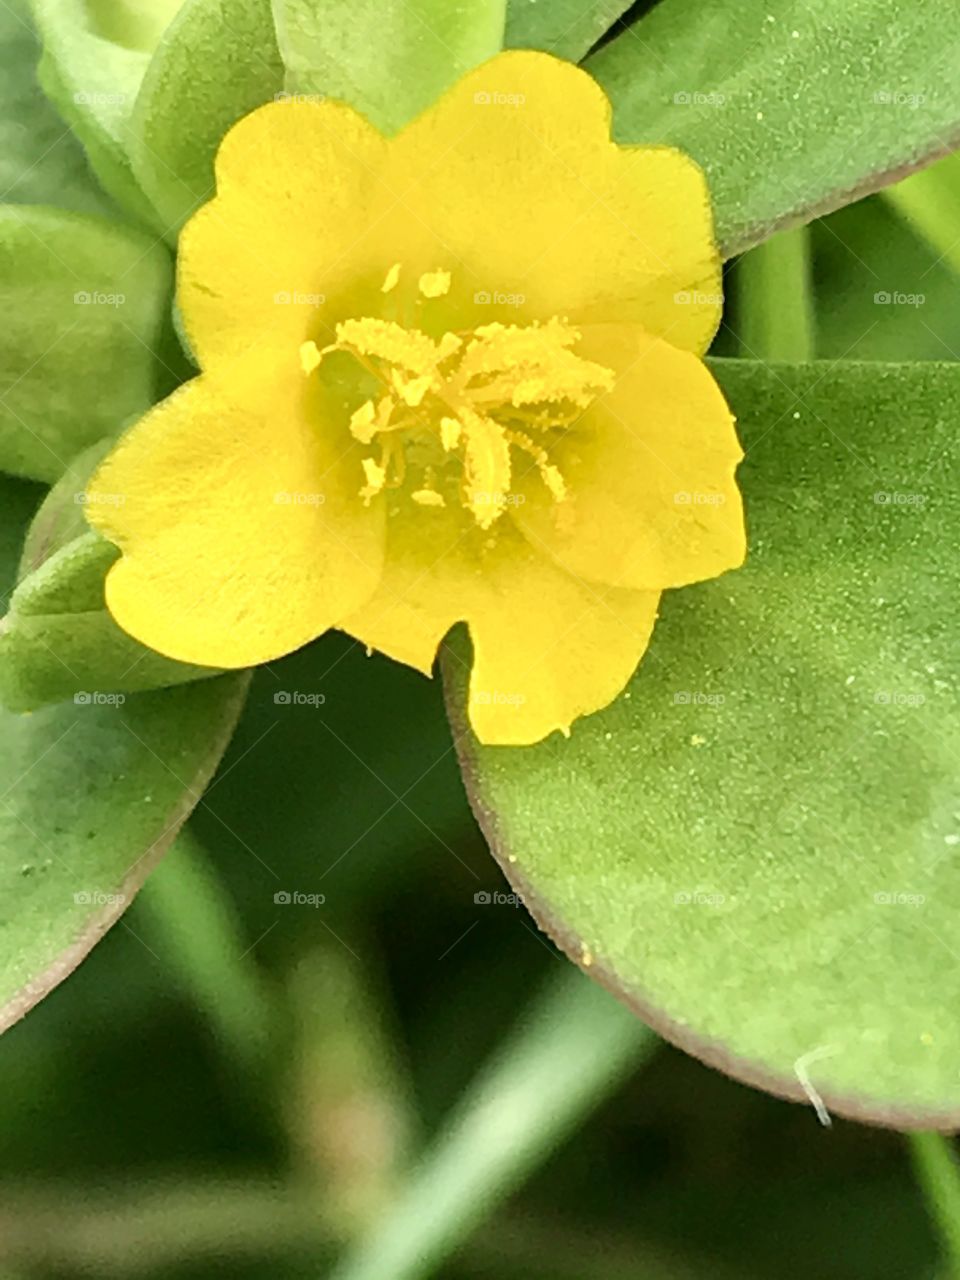 Sweet yellow flower